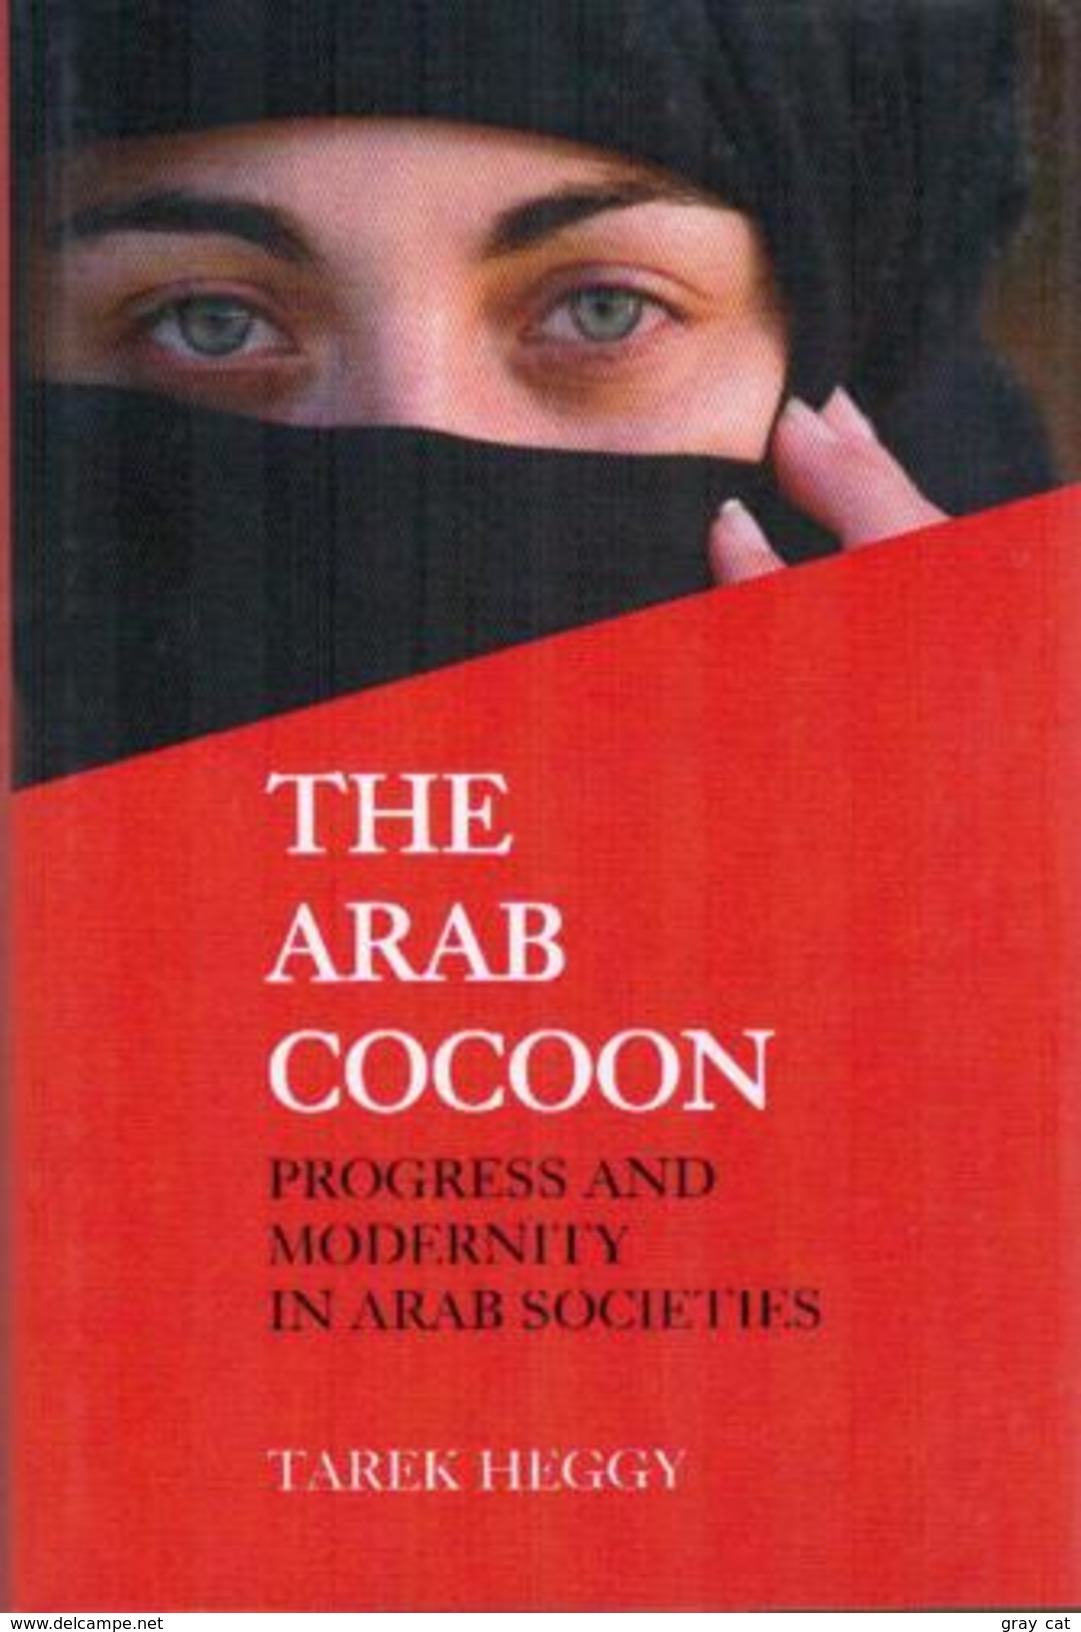 The Arab Cocoon: Progress And Modernity In The Arab Societies By Tarek Heggy (ISBN 9780853039228) - Midden-Oosten